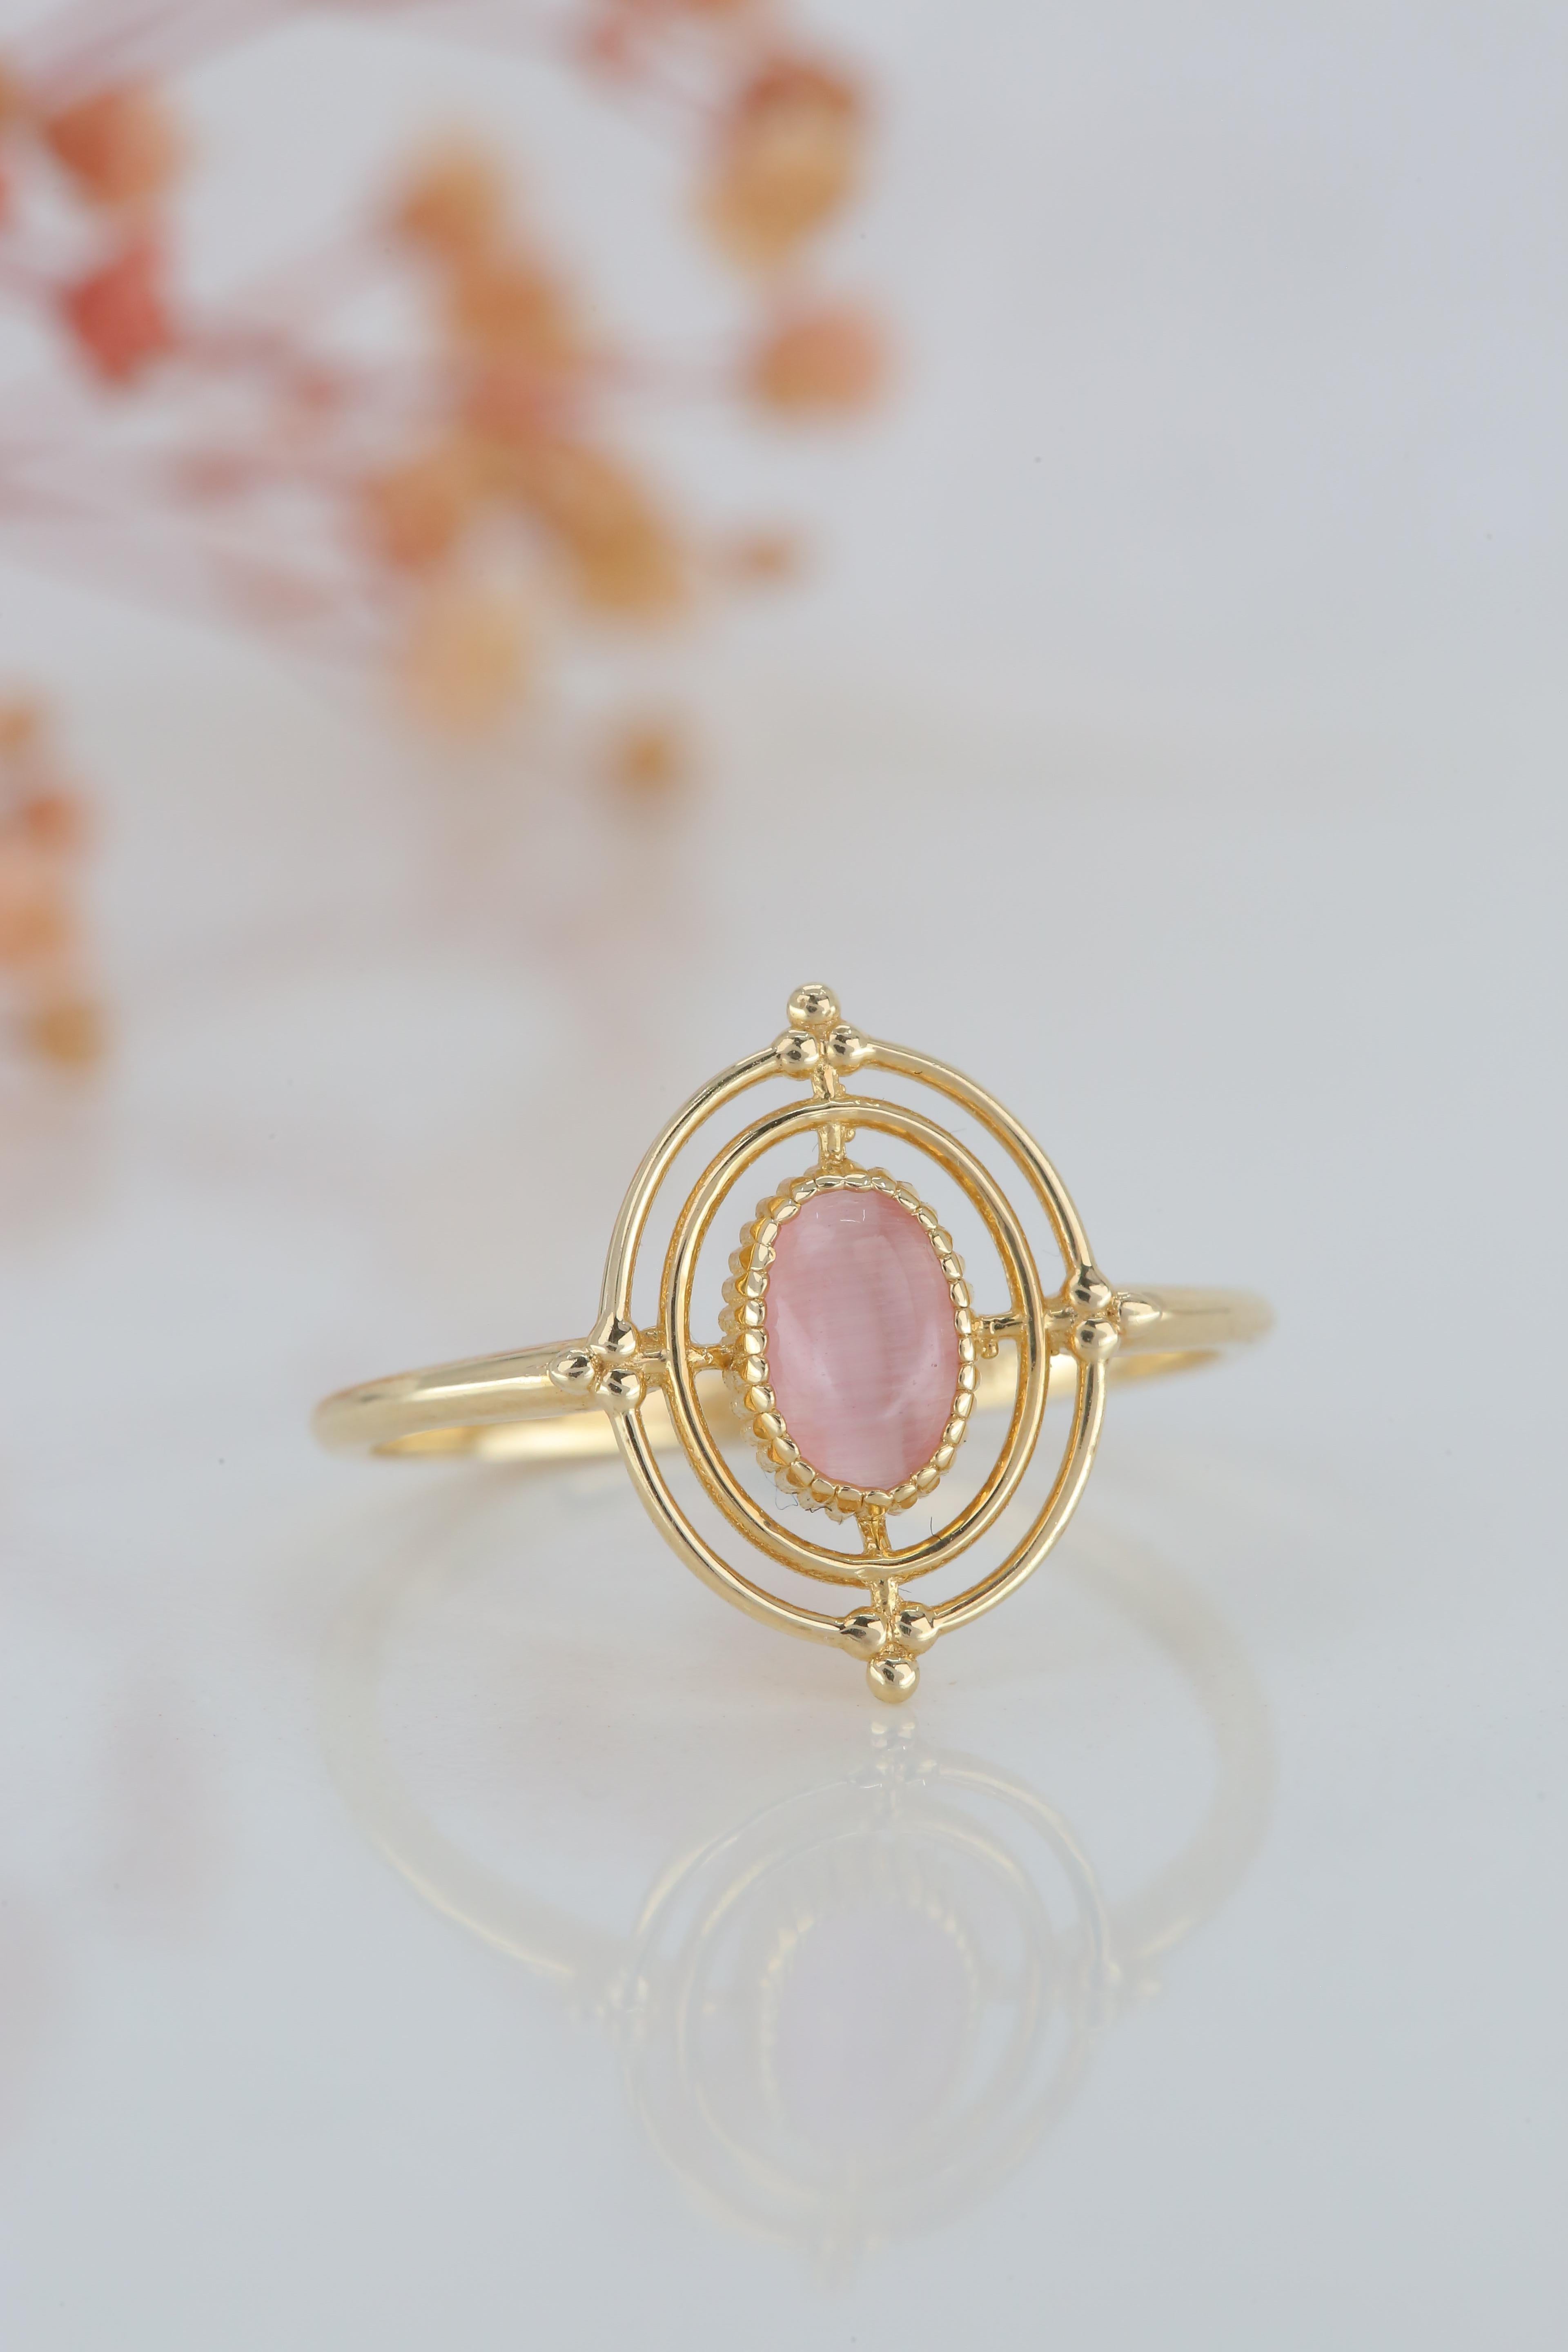 For Sale:  14K Gold Vintage Style Oval Cut Pink Quartz Ring 7